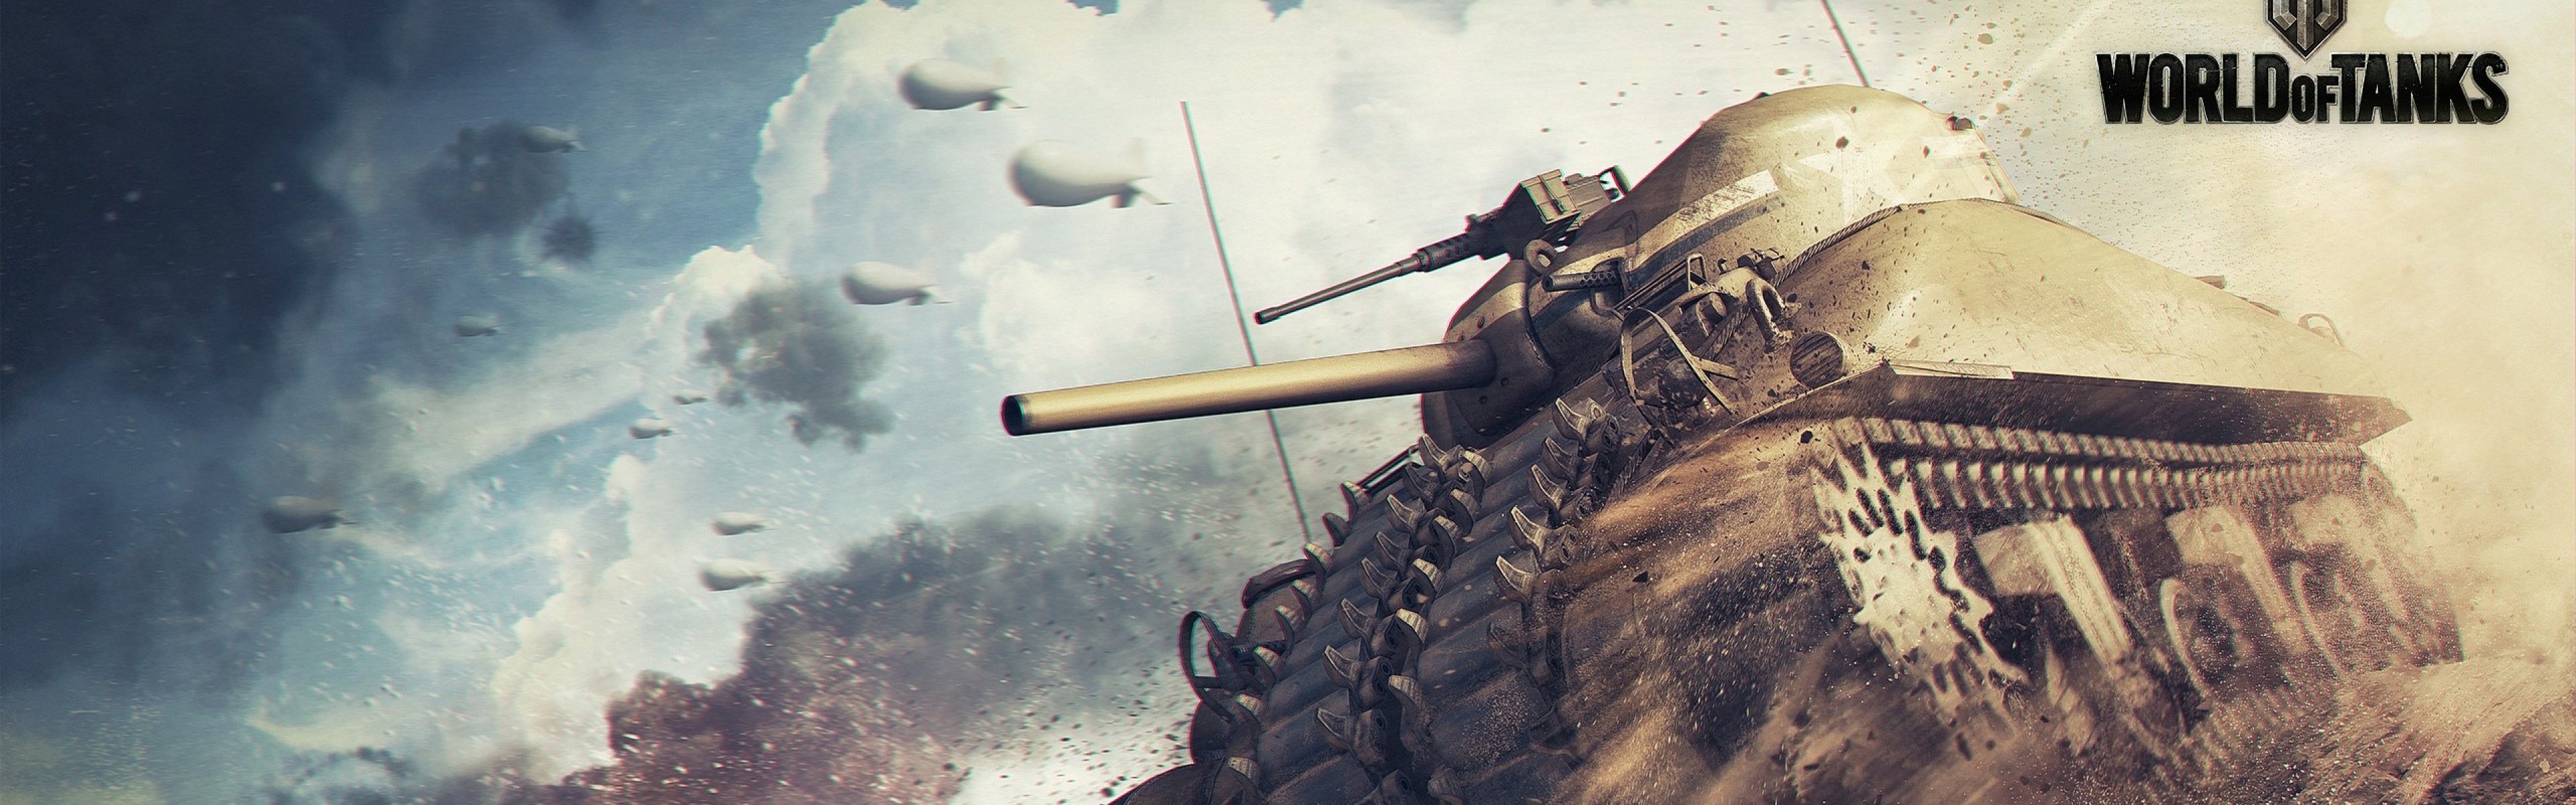 World Of Tanks Tank M4 Sherman Wallpaper Background Dual Wide